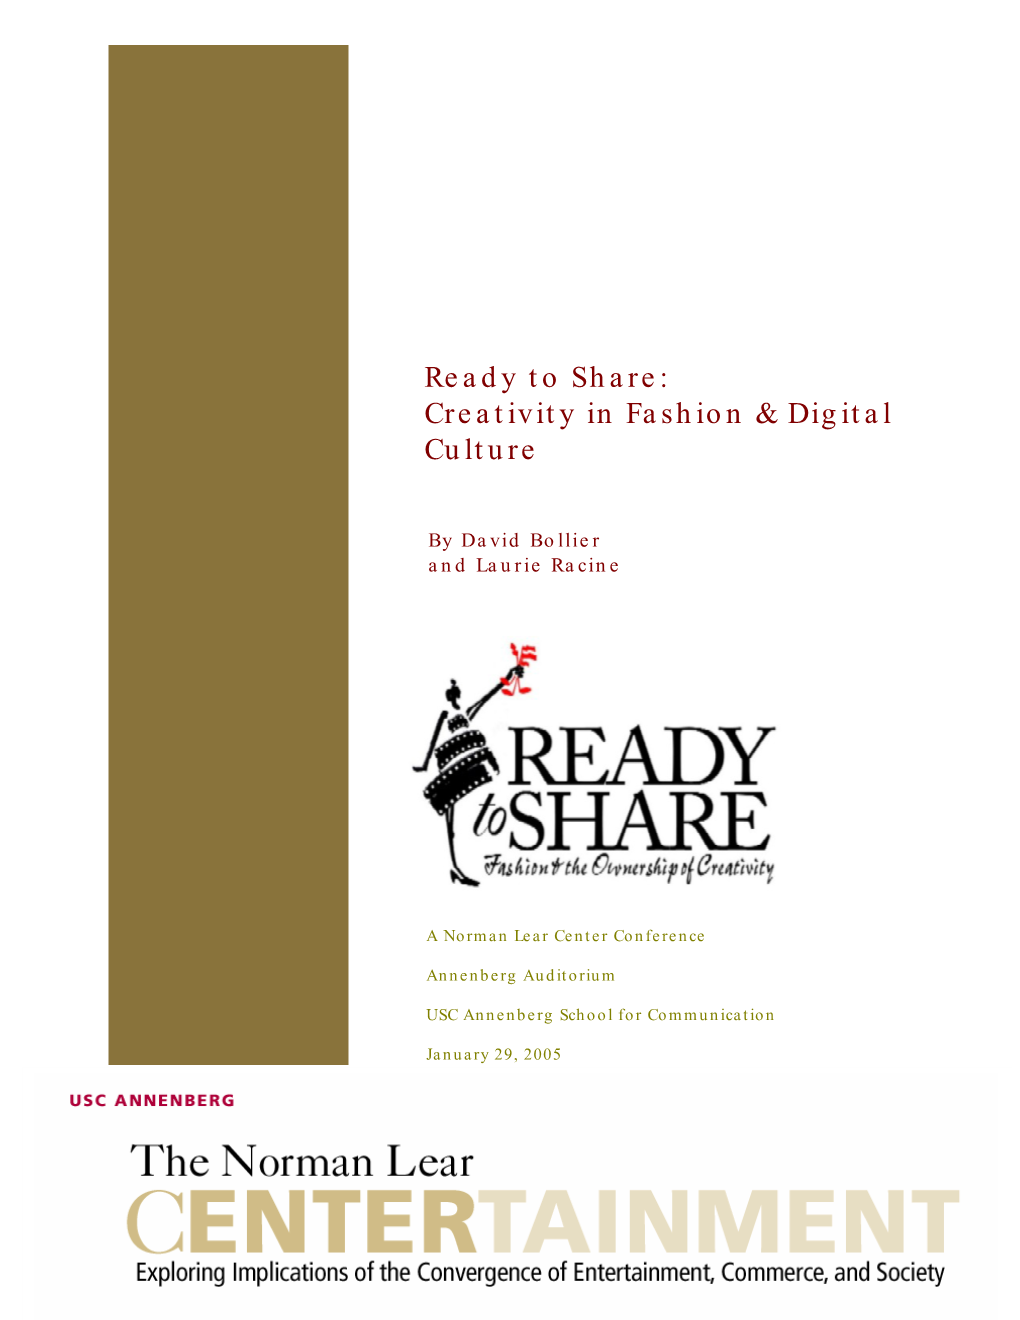 Ready to Share: Creativity in Fashion & Digital Culture